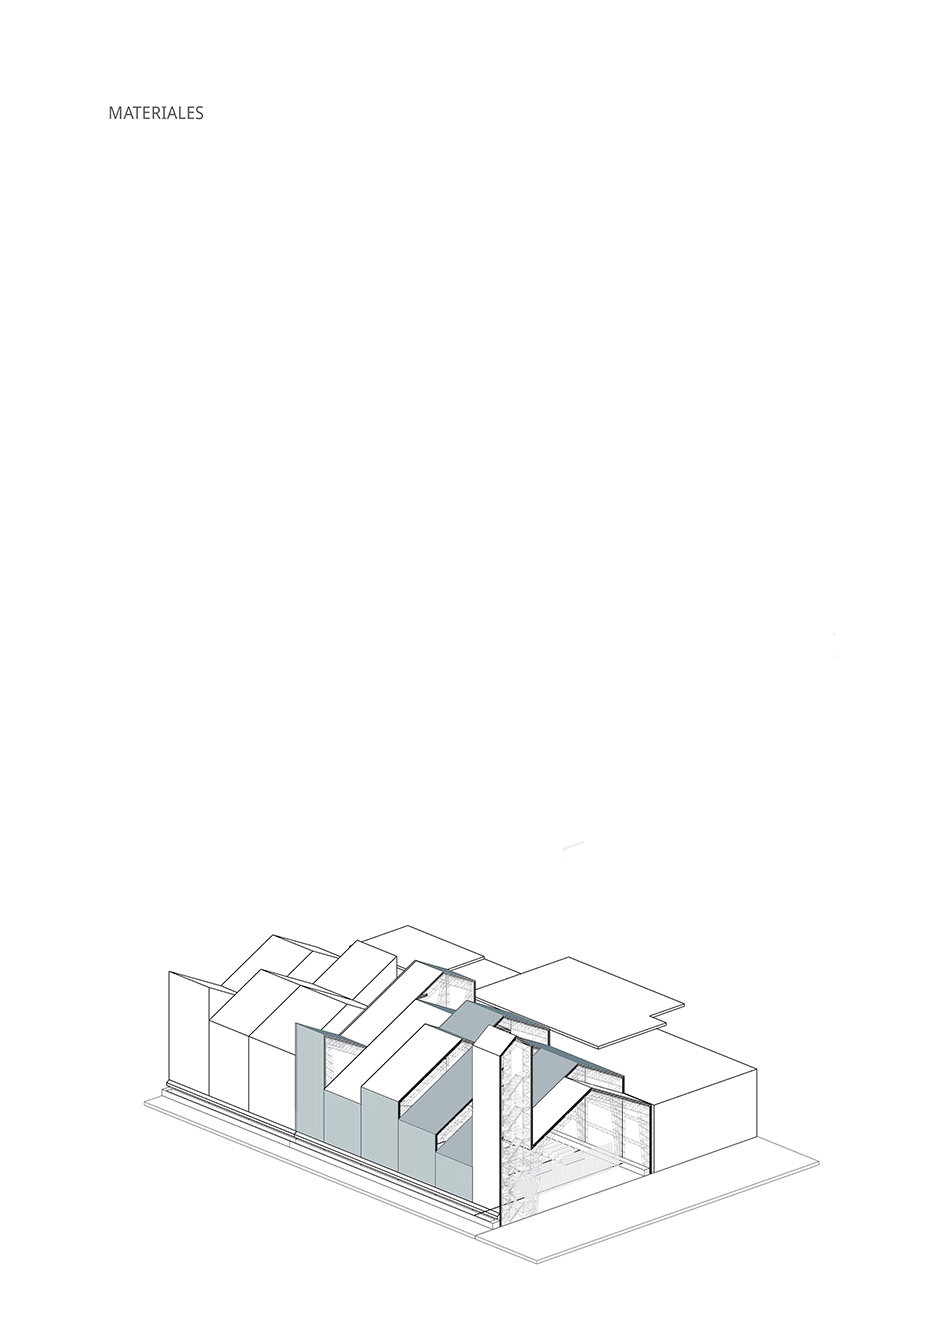 alt=esquema de materiales de la casa del pueblo